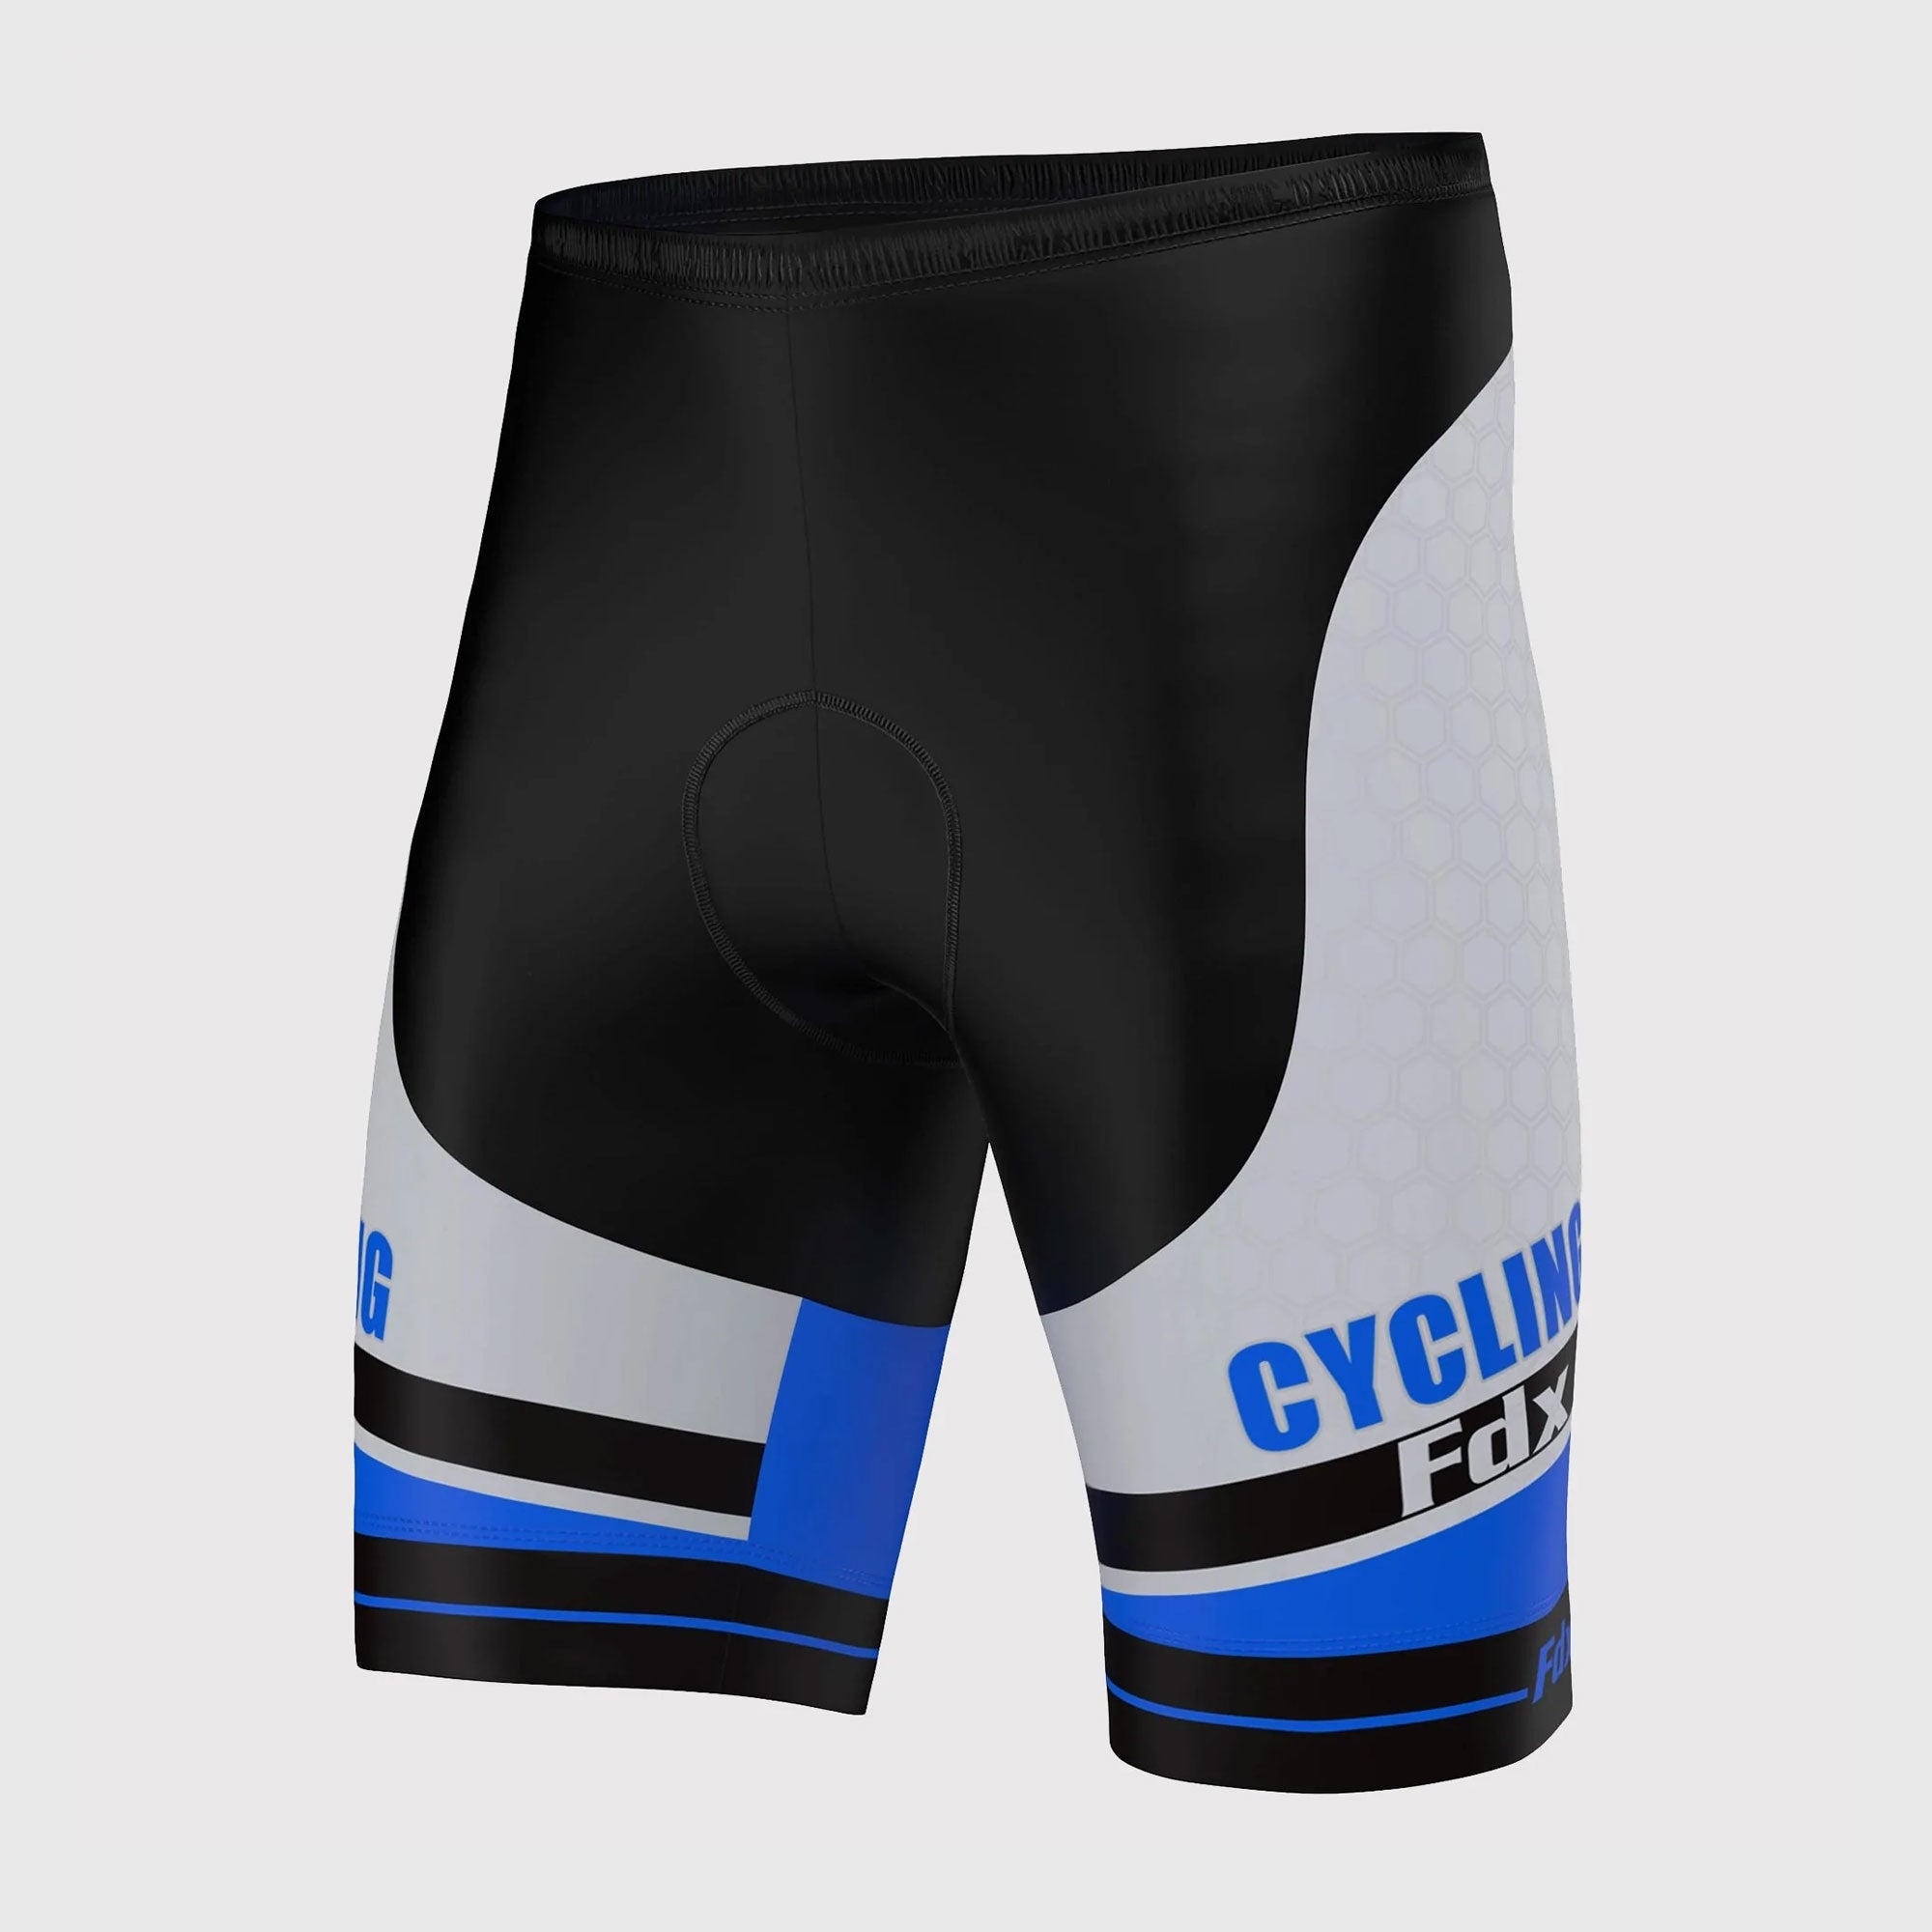 Fdx Best Men's Black & Blue Gel Padded Cycling Shorts for Summer Best Outdoor Knickers Road Bike Short Length Pants - Apex